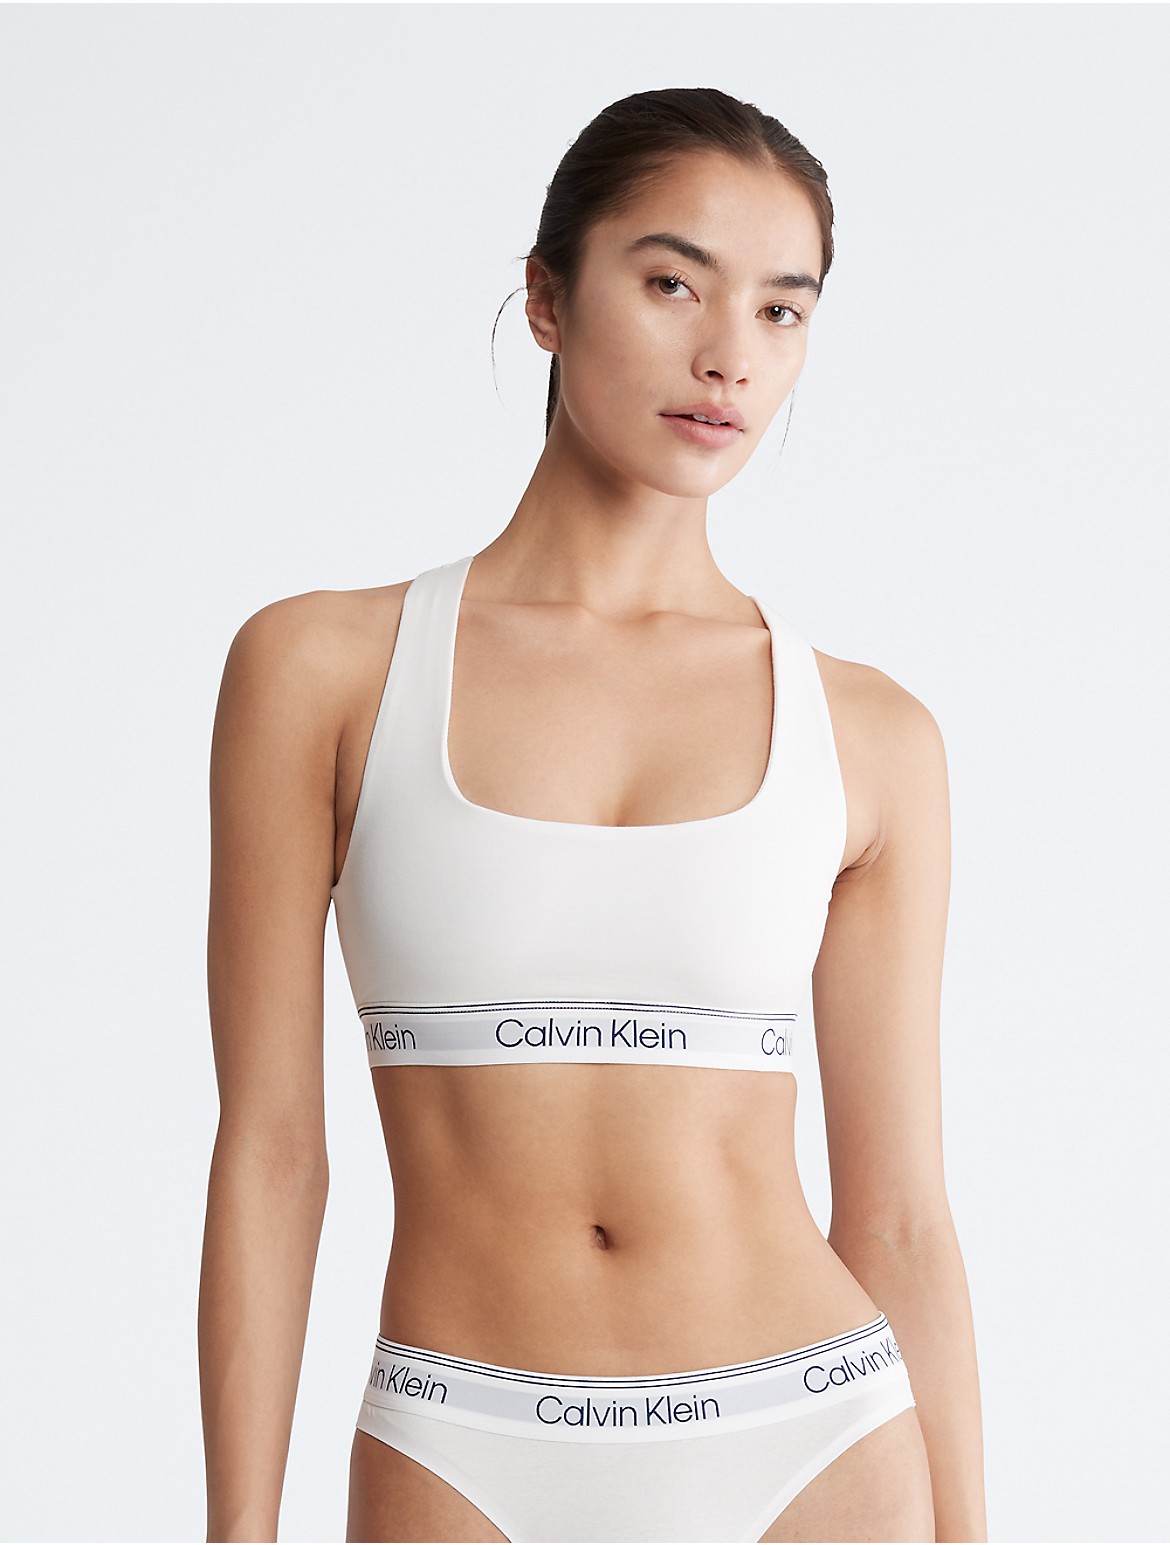 Calvin Klein Women's Calvin Klein Athletic Unlined Bralette - White - XS